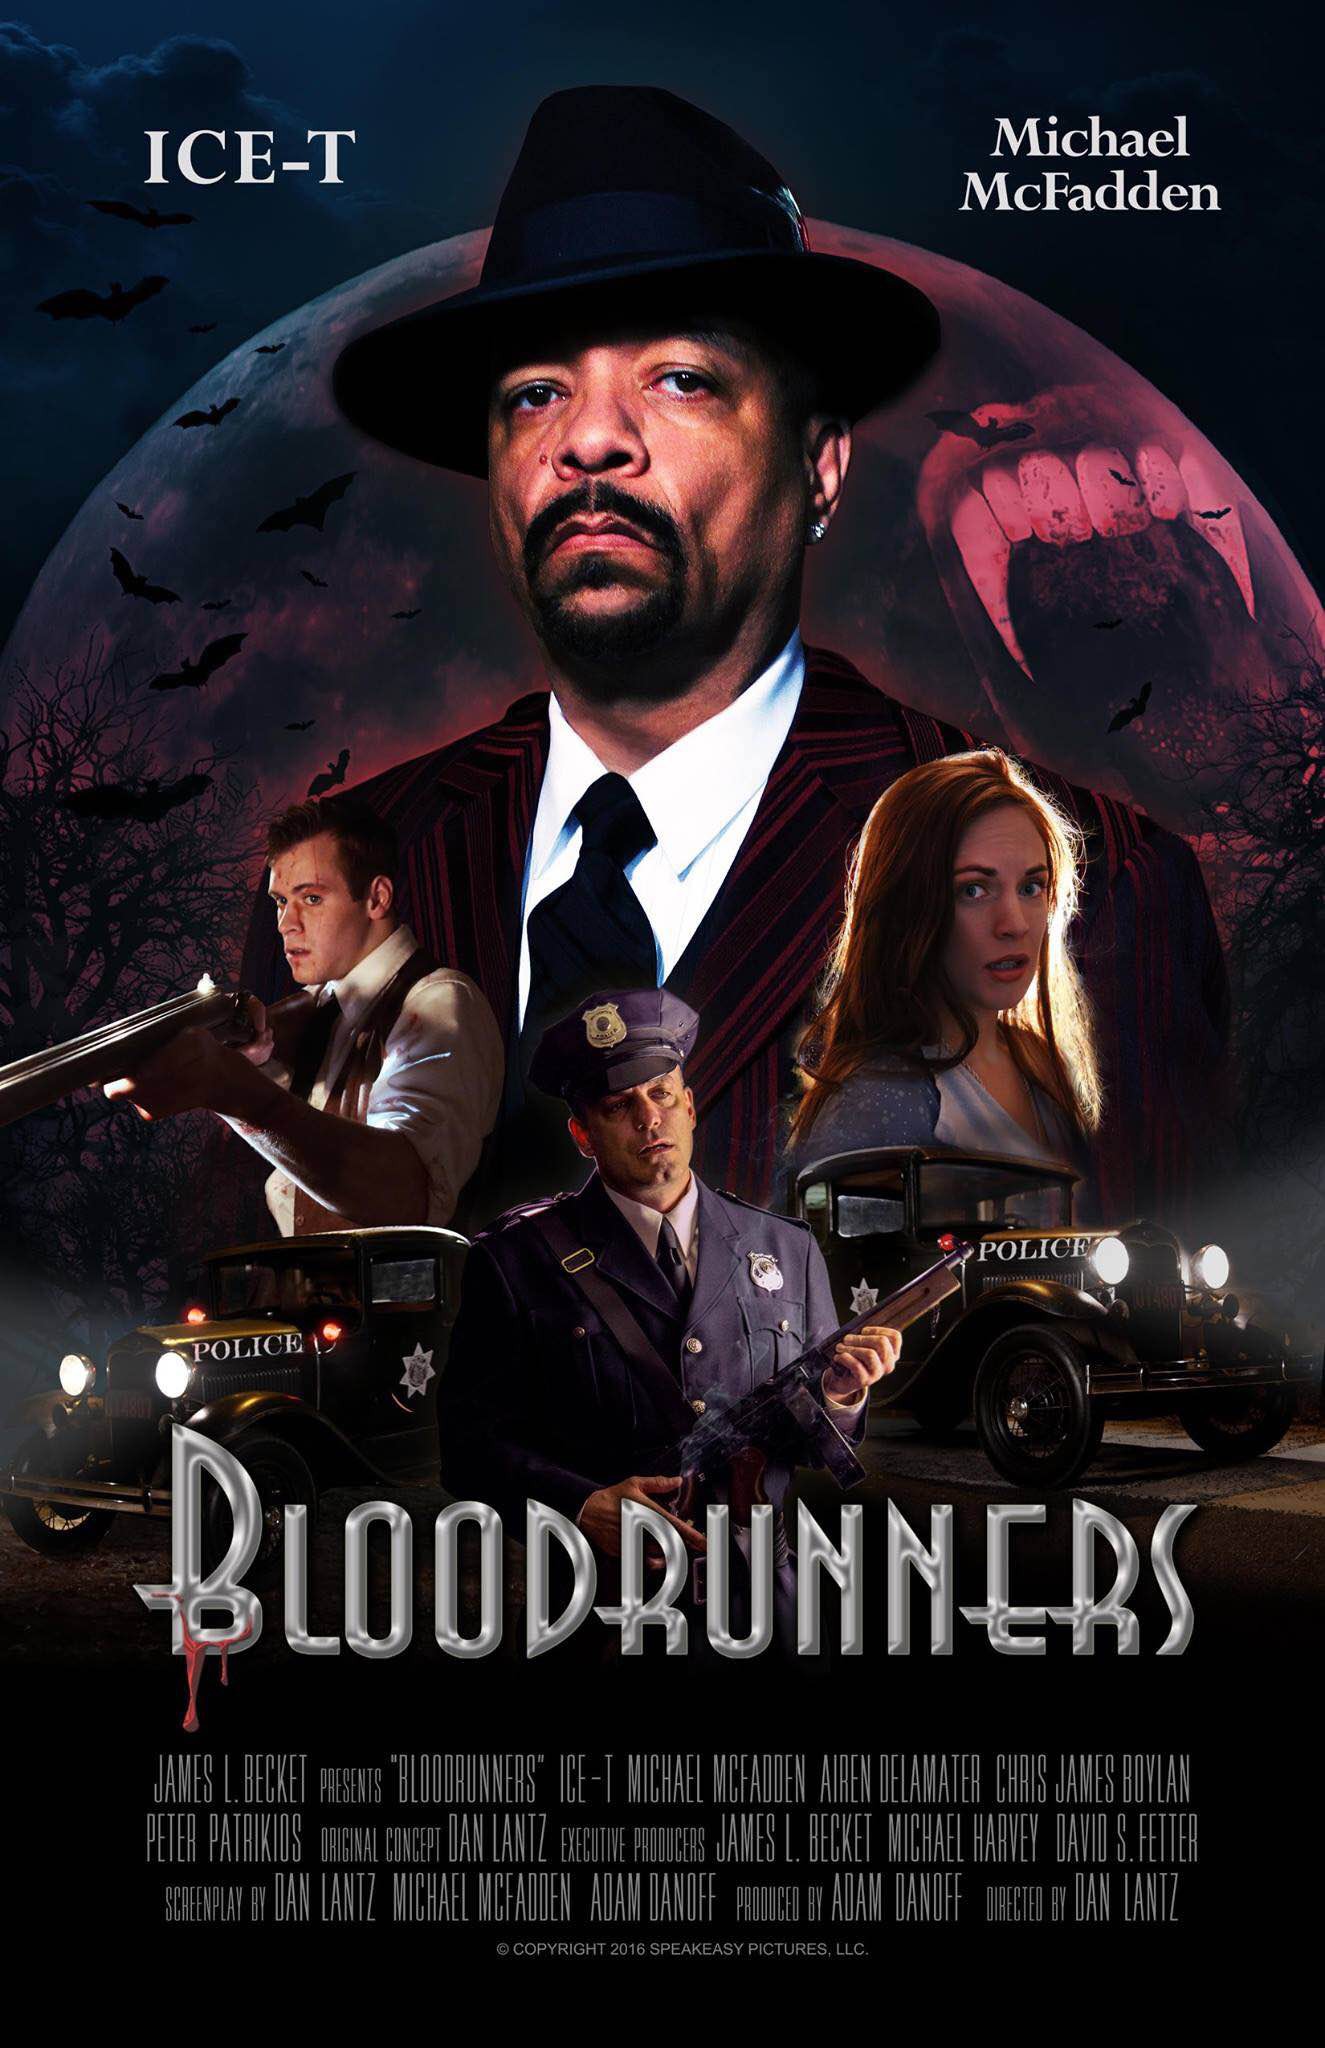 Mega Sized Movie Poster Image for Bloodrunners 